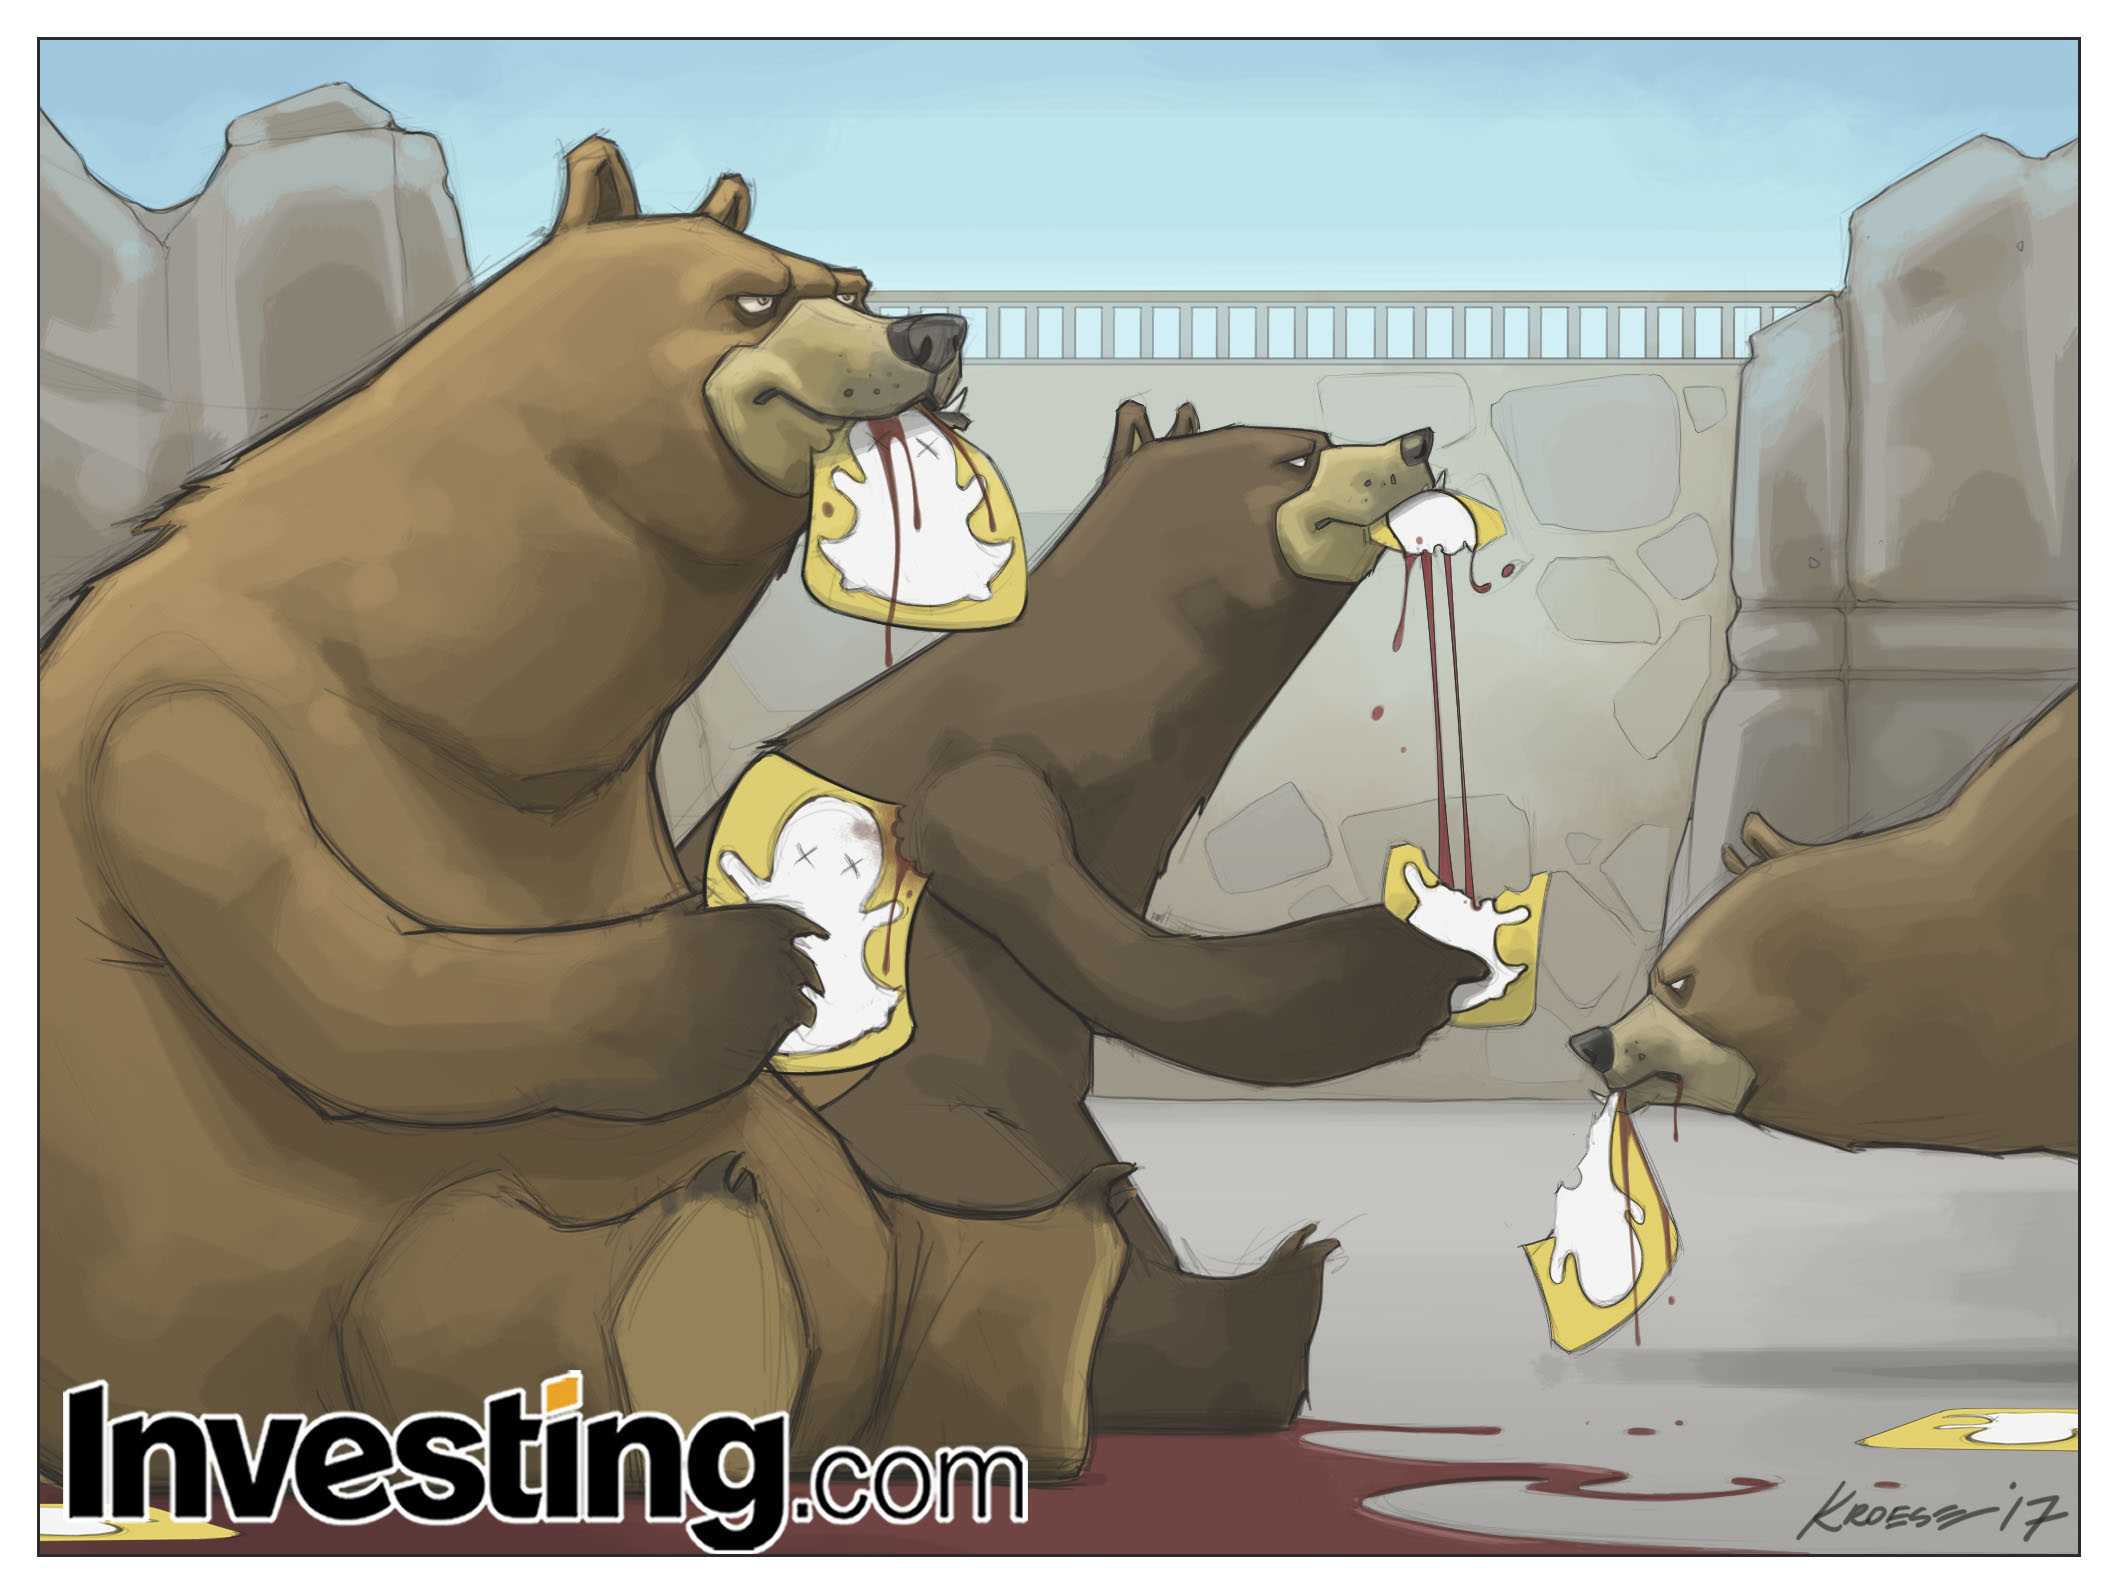 Bears take control of $SNAP as bloodbath ensues.